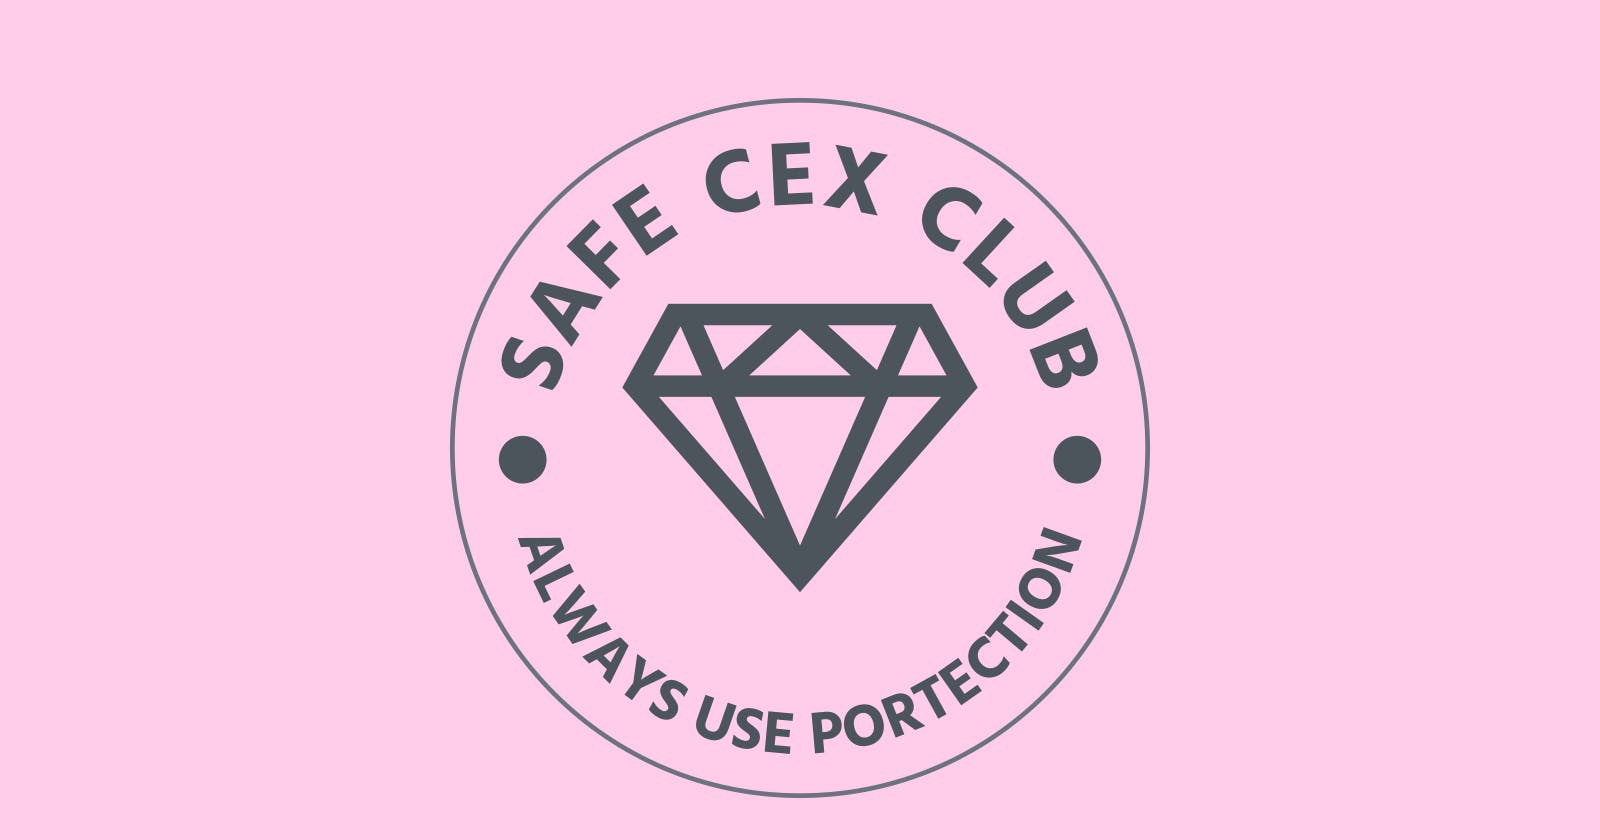 Introducing SafeCEX Club